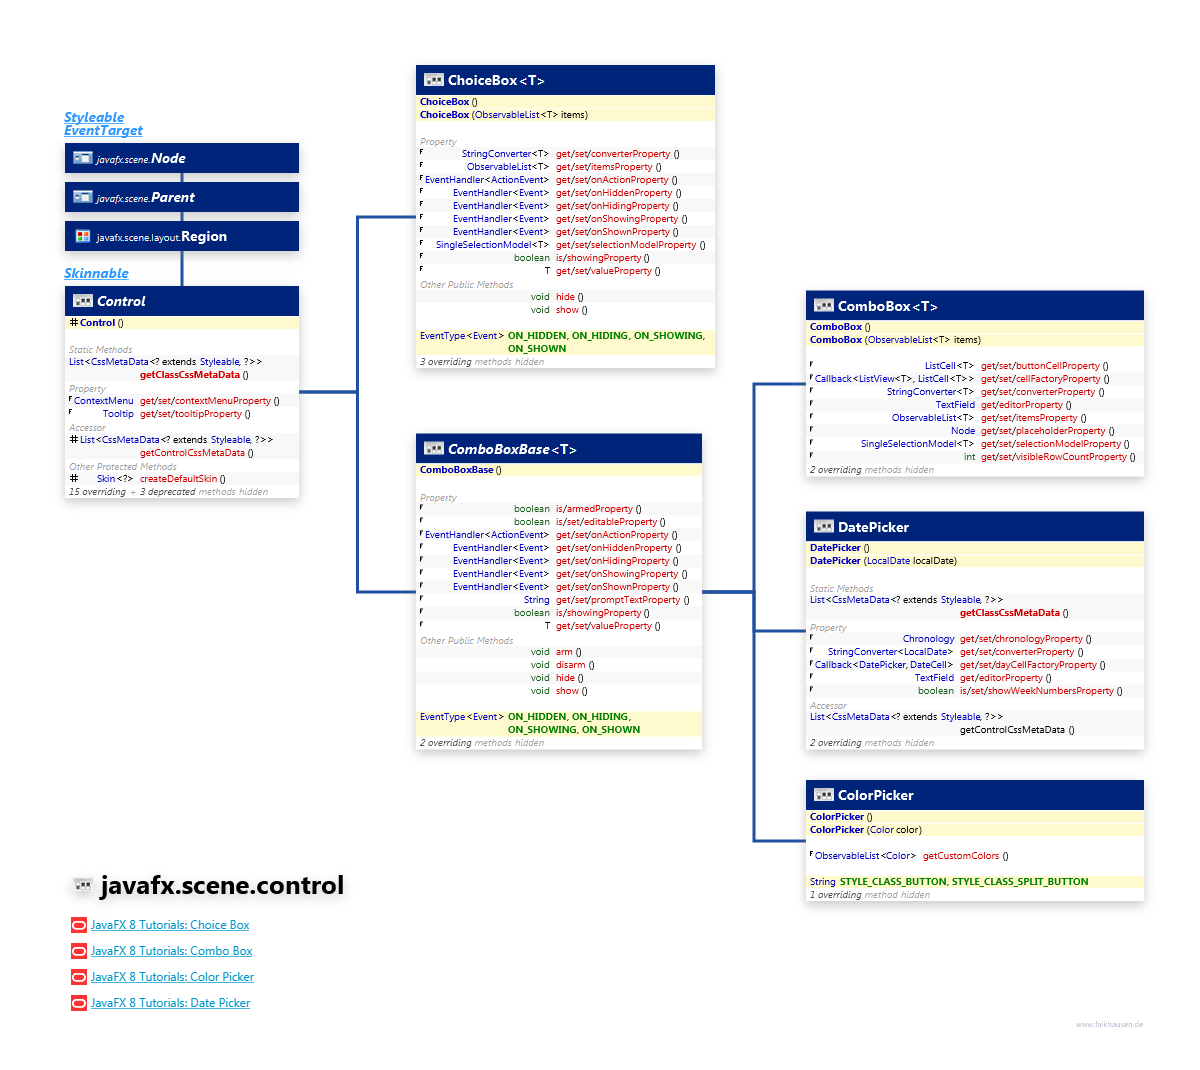 javafx.scene.control Choice, Combo class diagram and api documentation for JavaFX 8